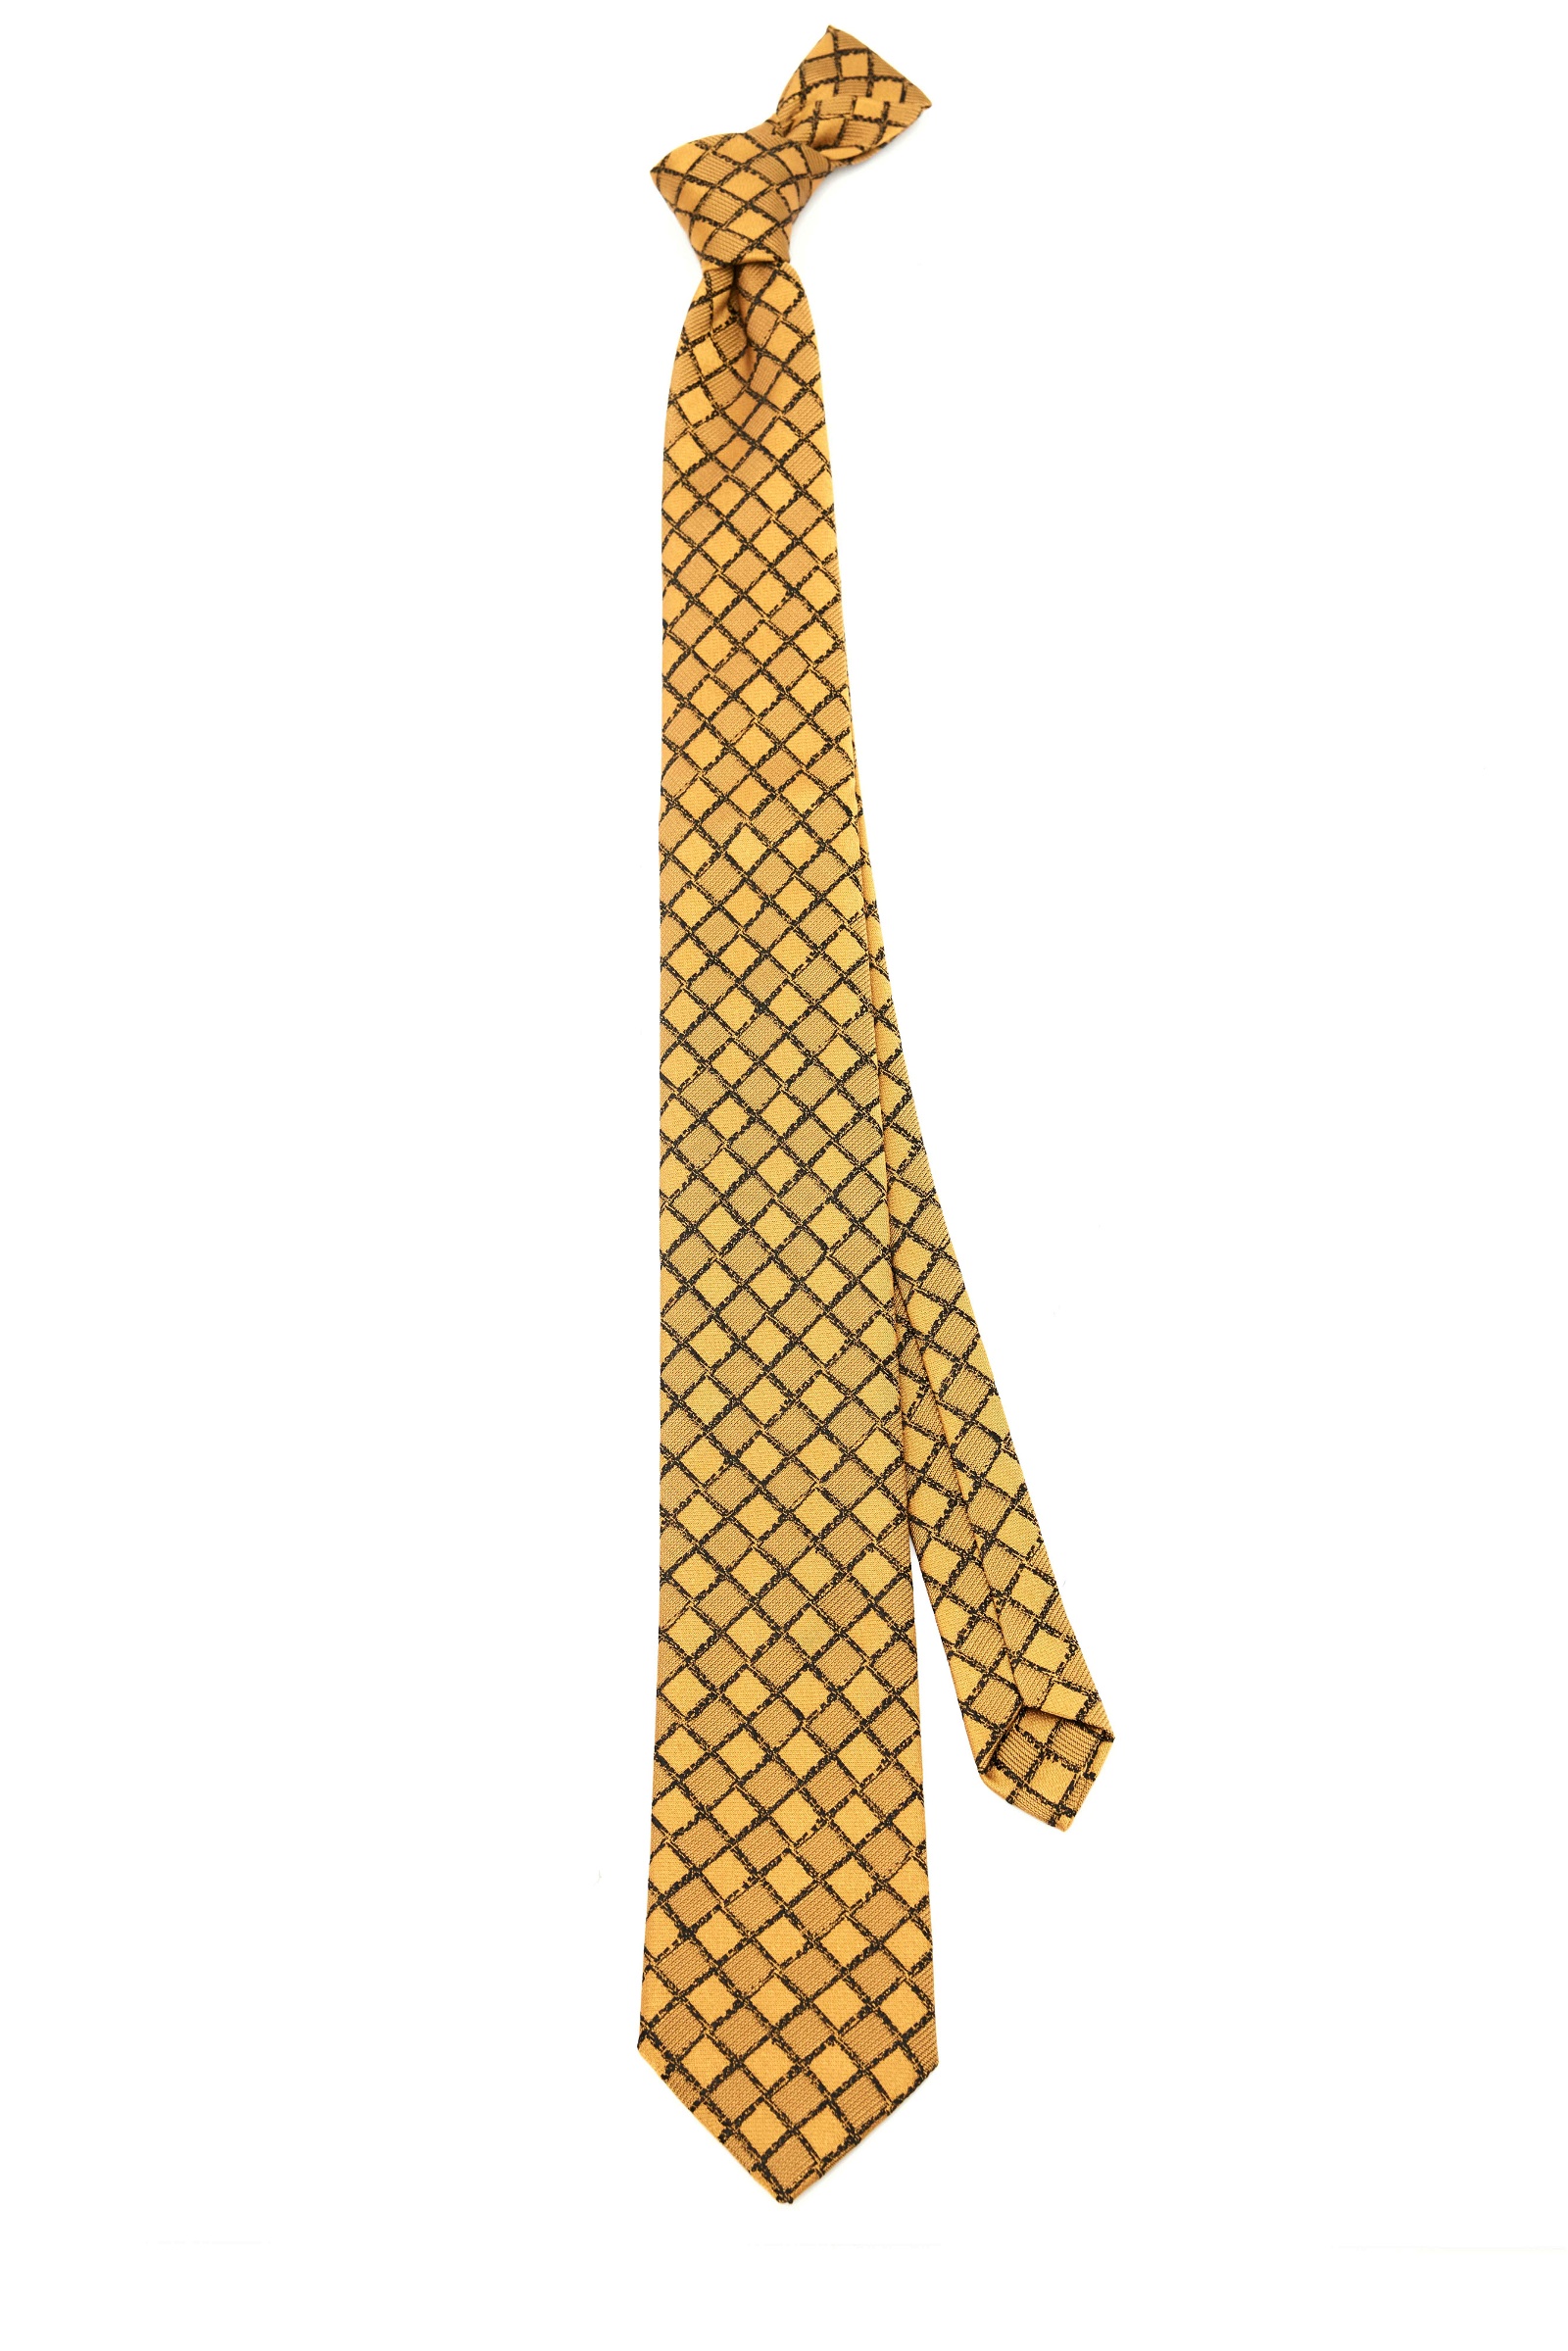  Mustard Tie